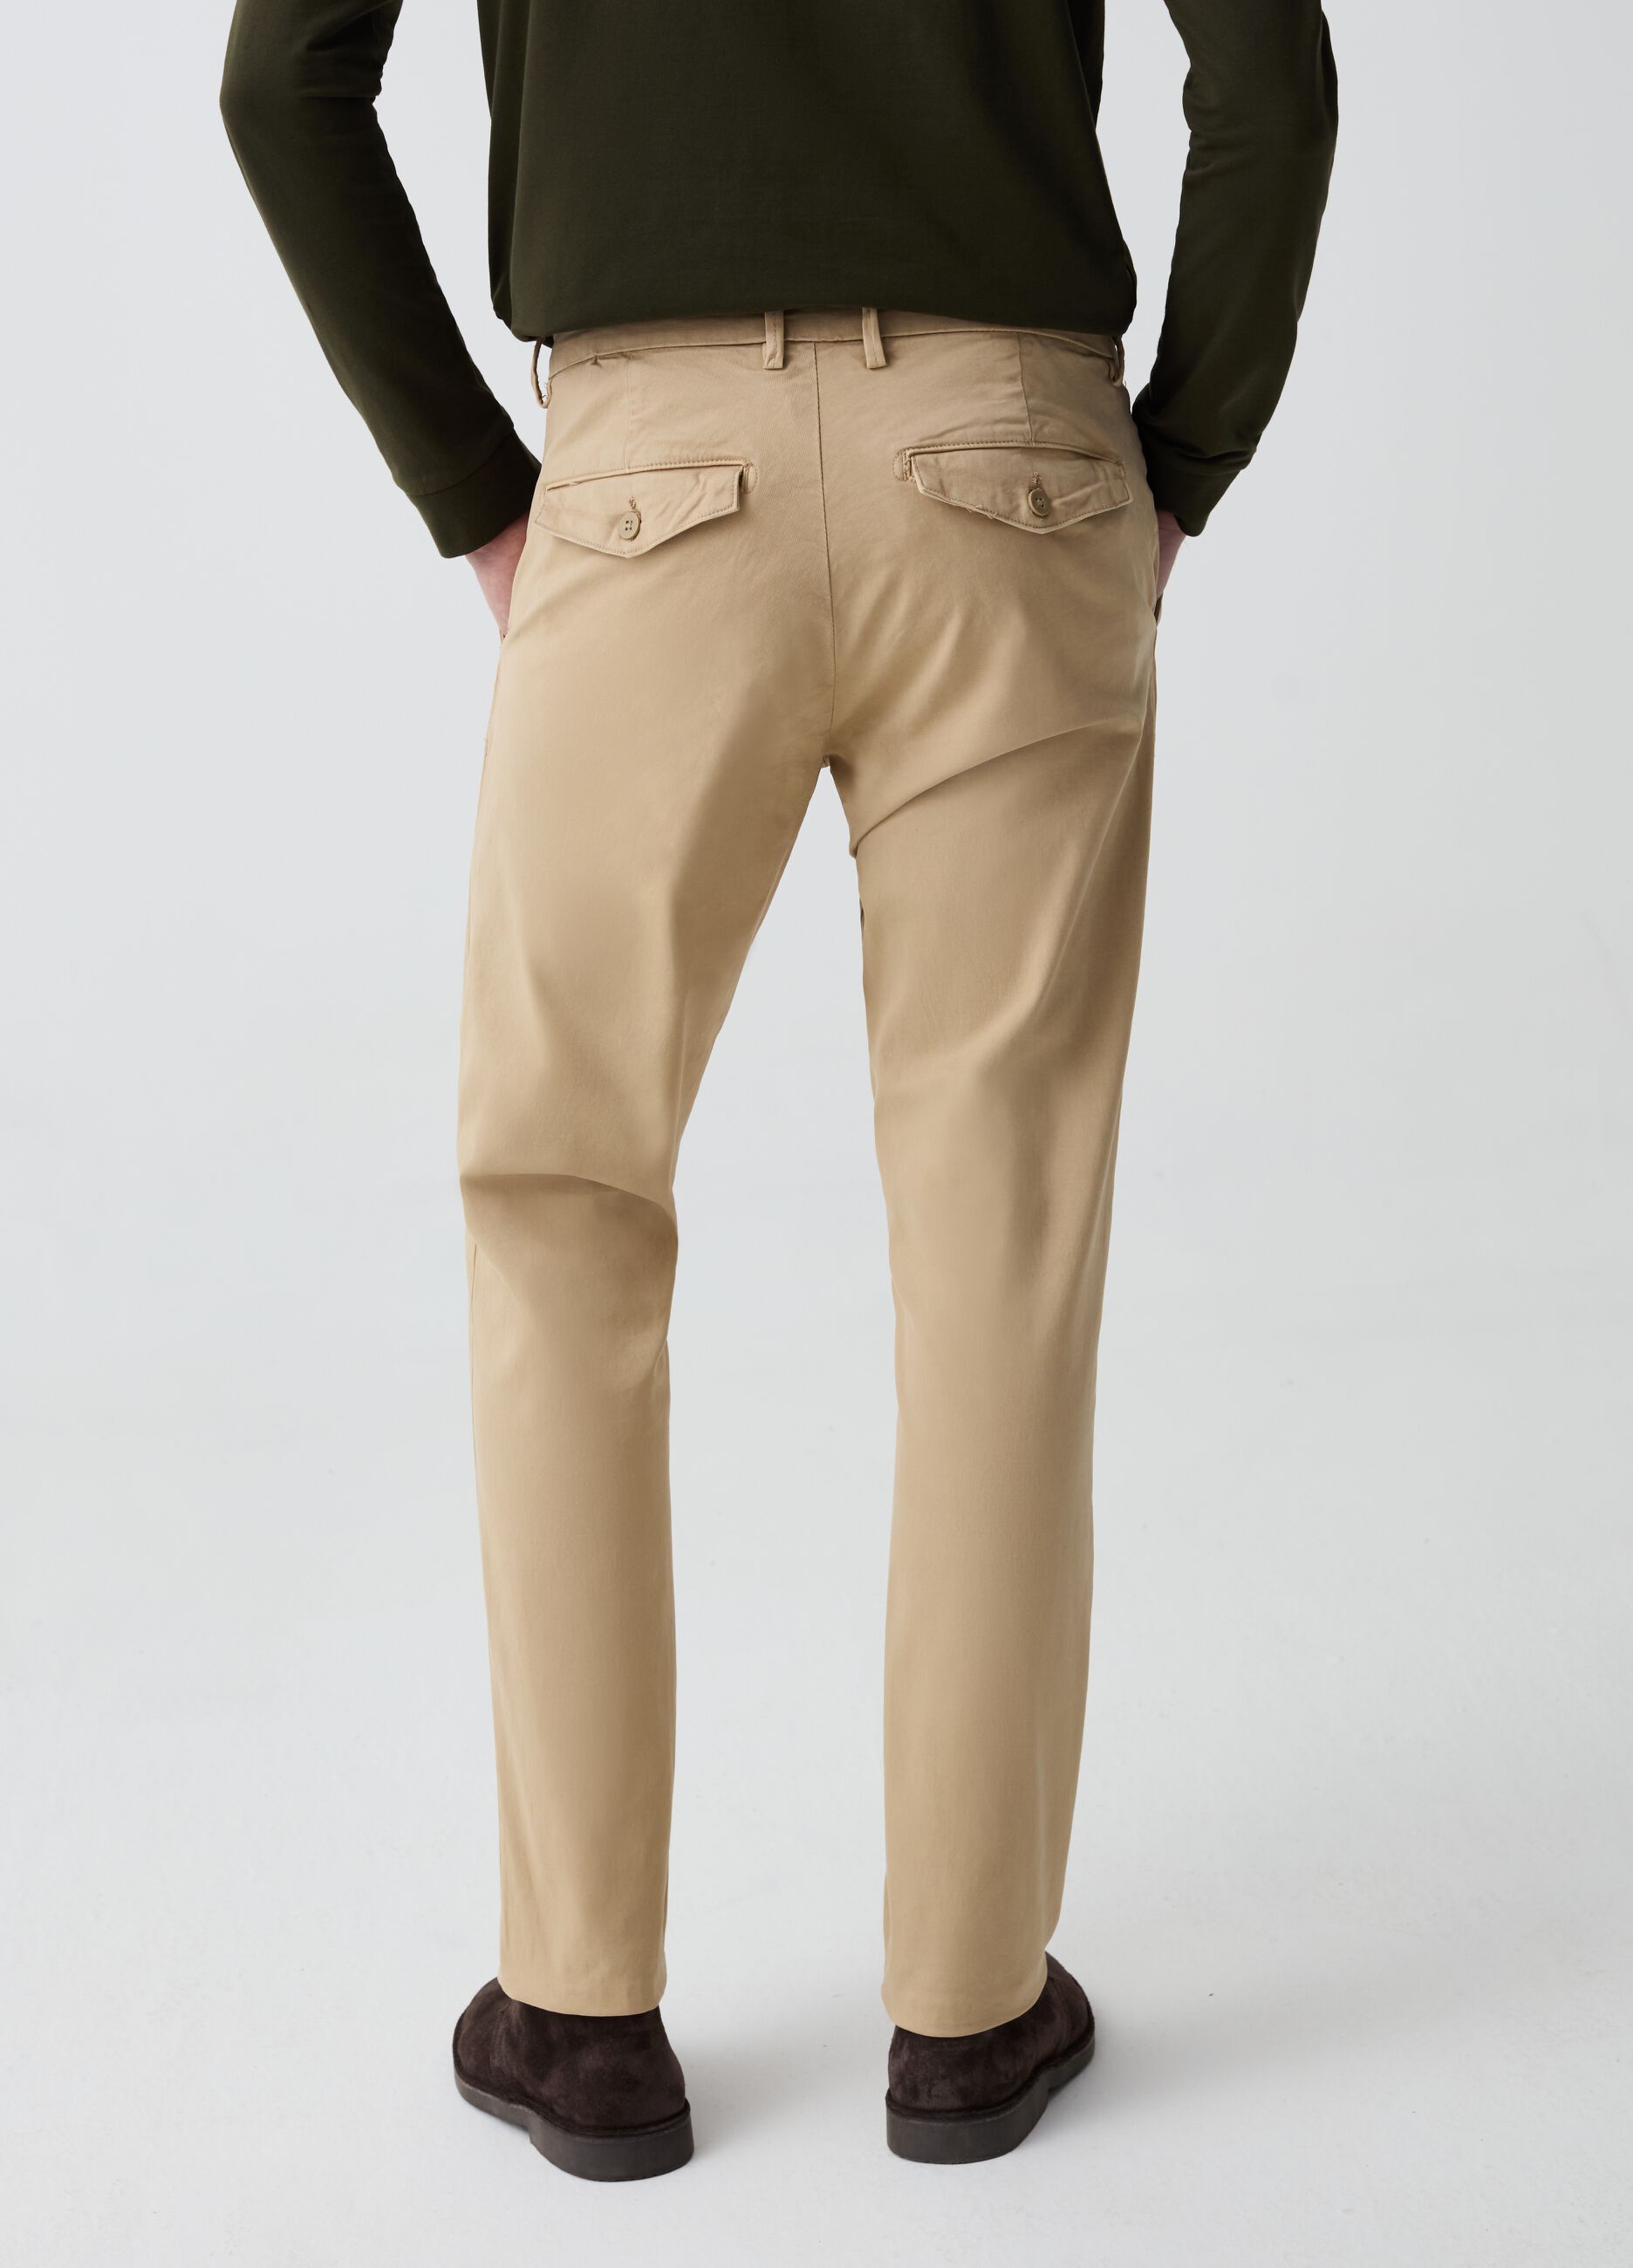 Pantalone chino slim fit in cotone stretch